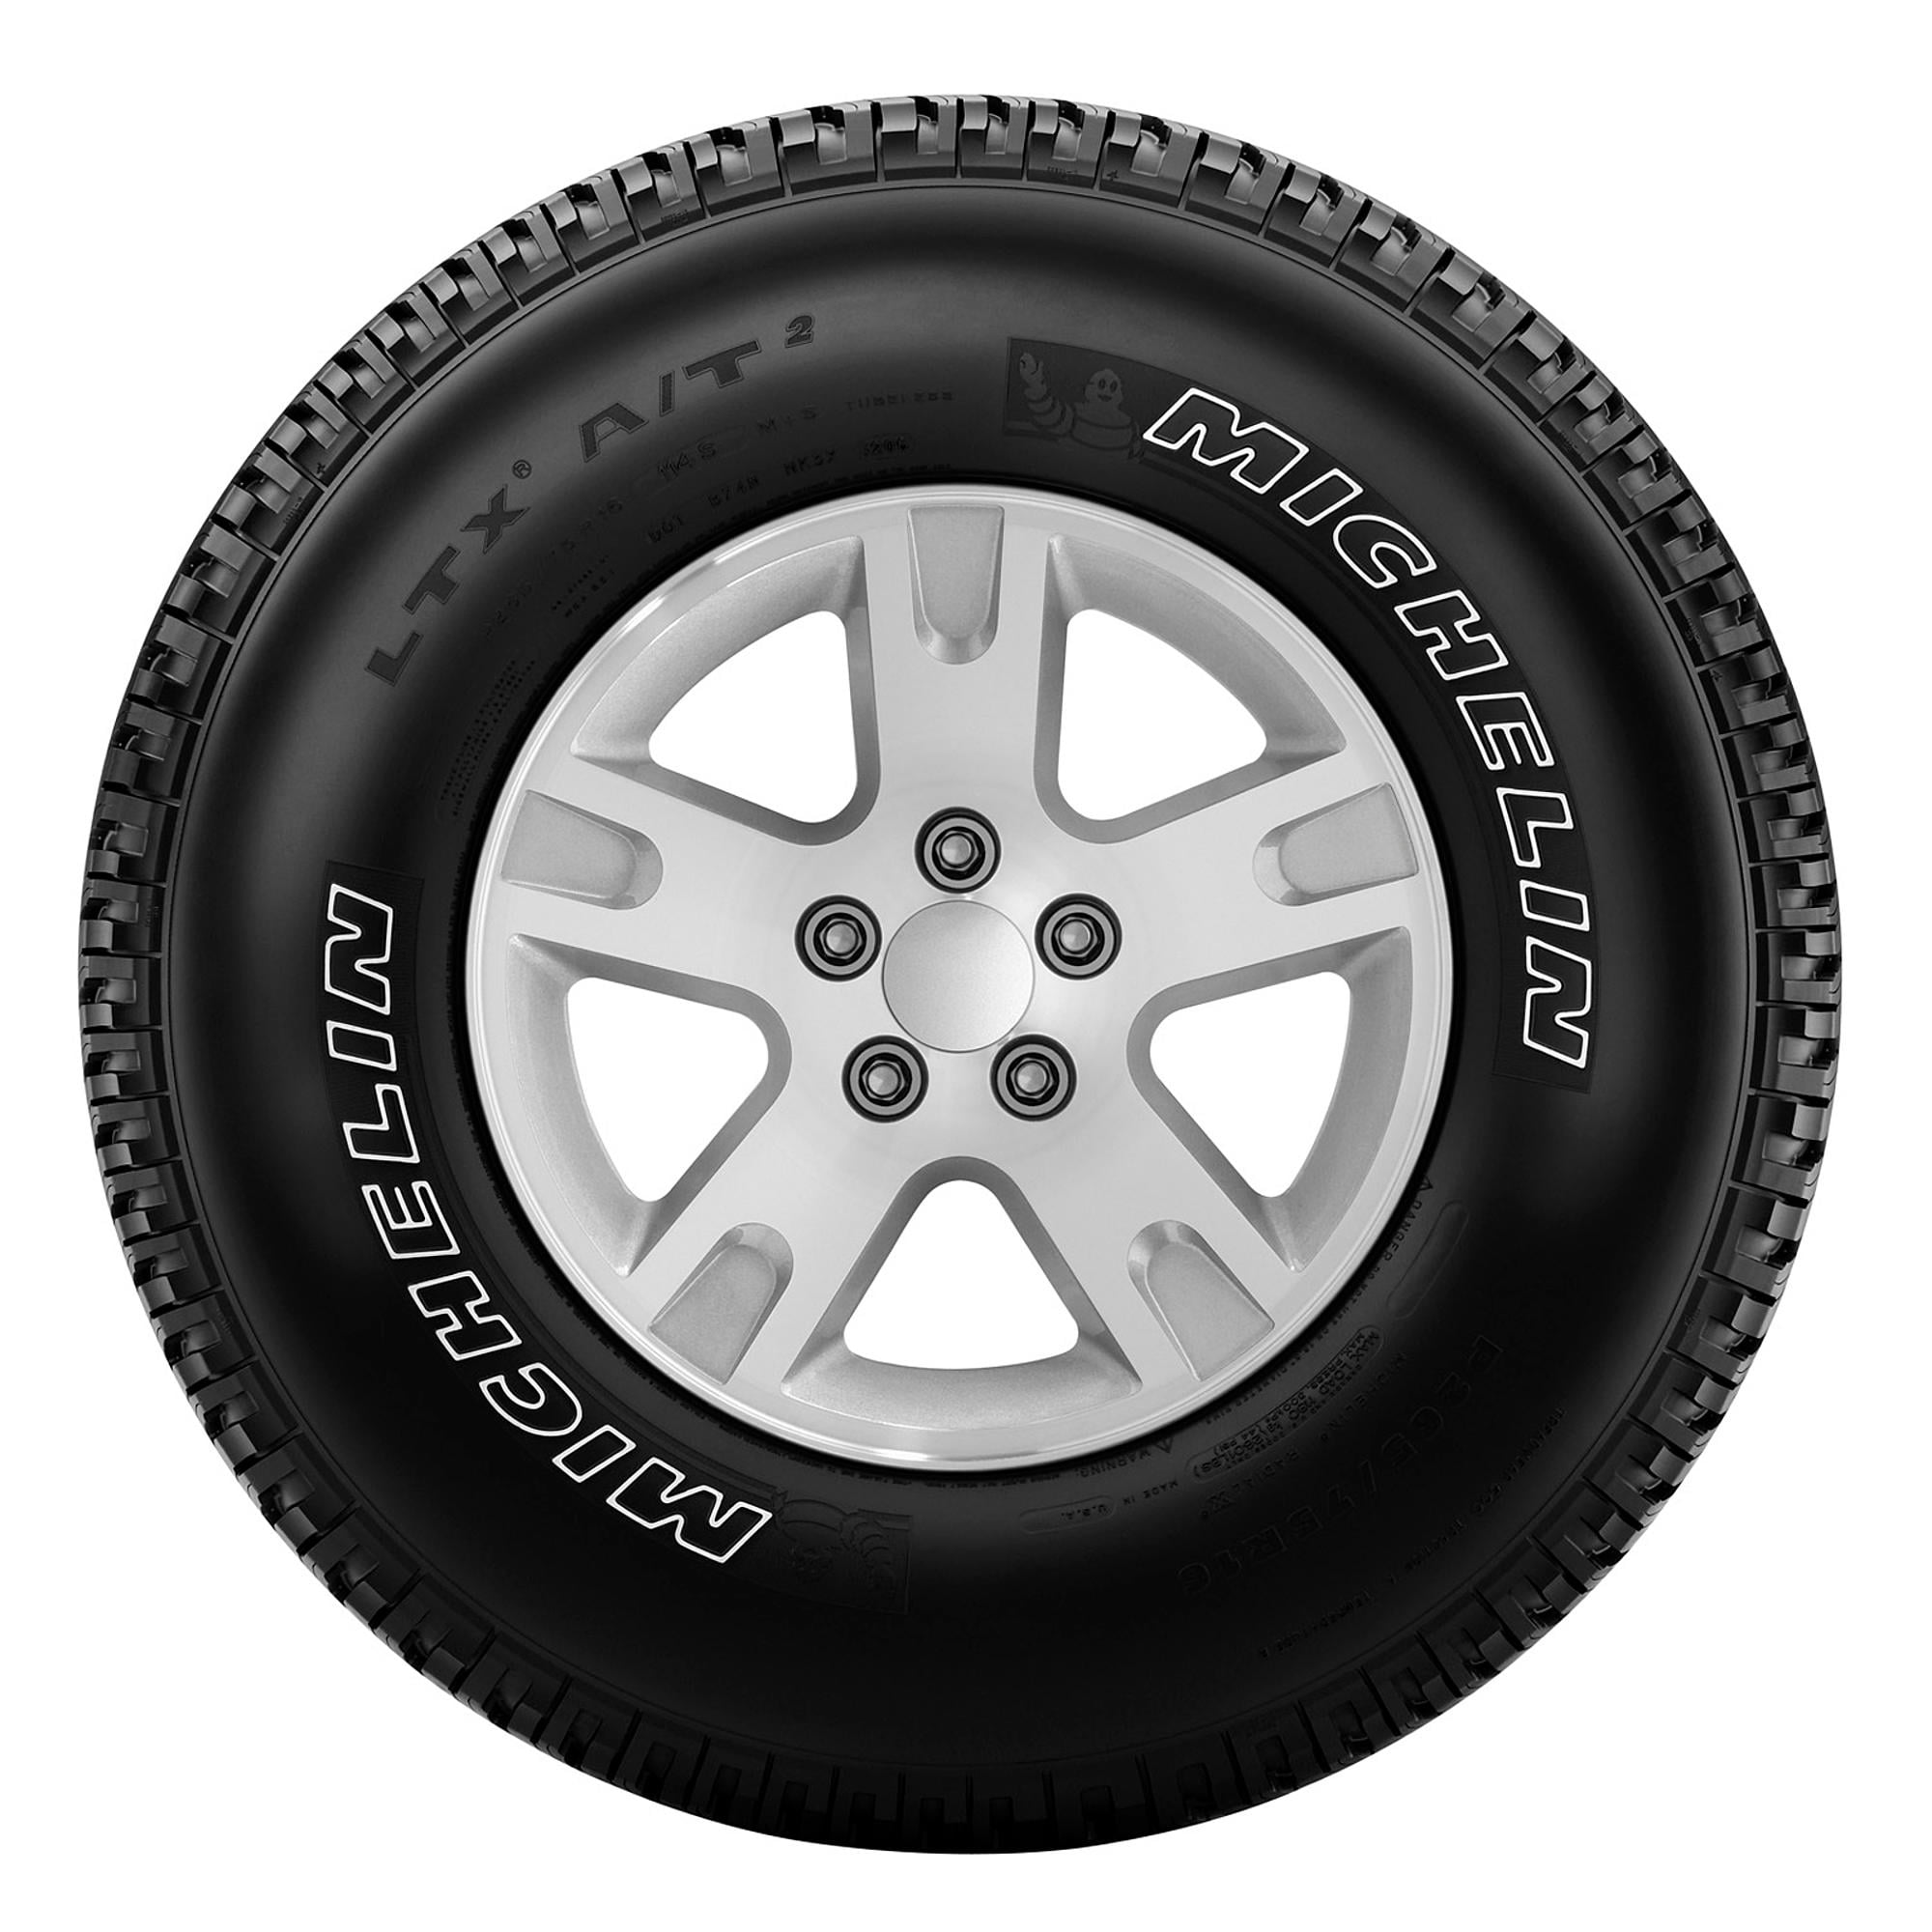 Michelin LTX A/T2 All-Season P265/70R17 113S Tire